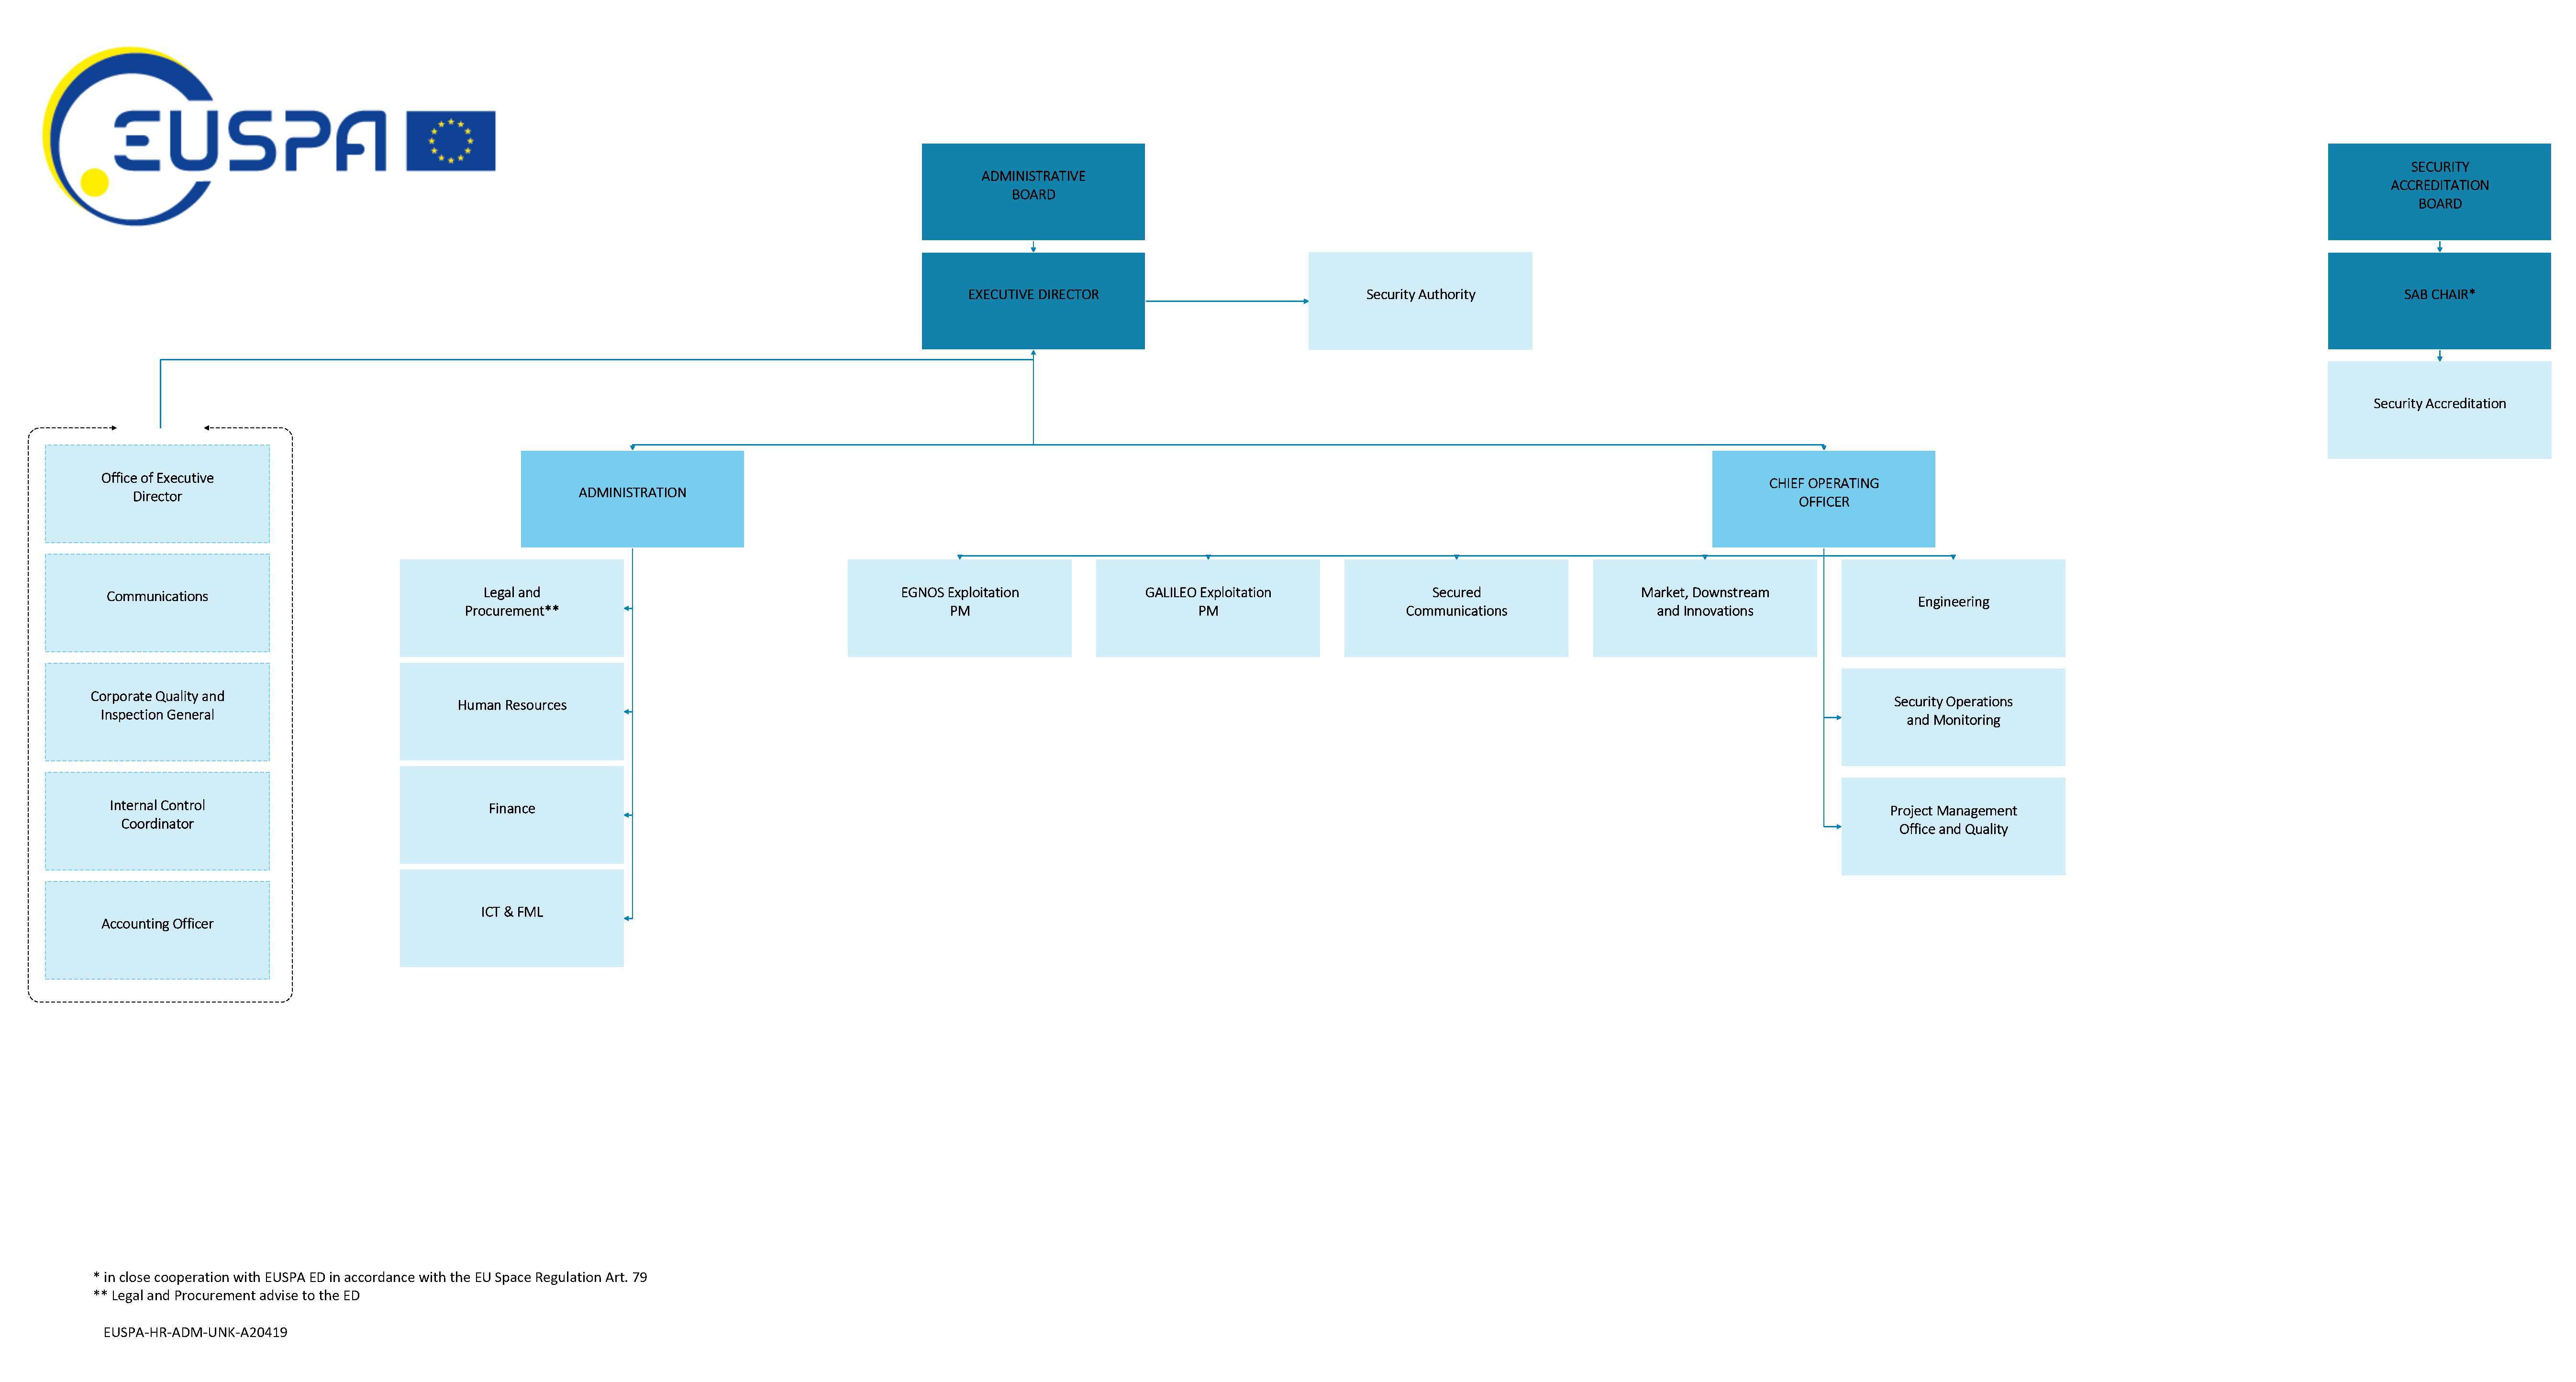  EUSPA Organisational Chart